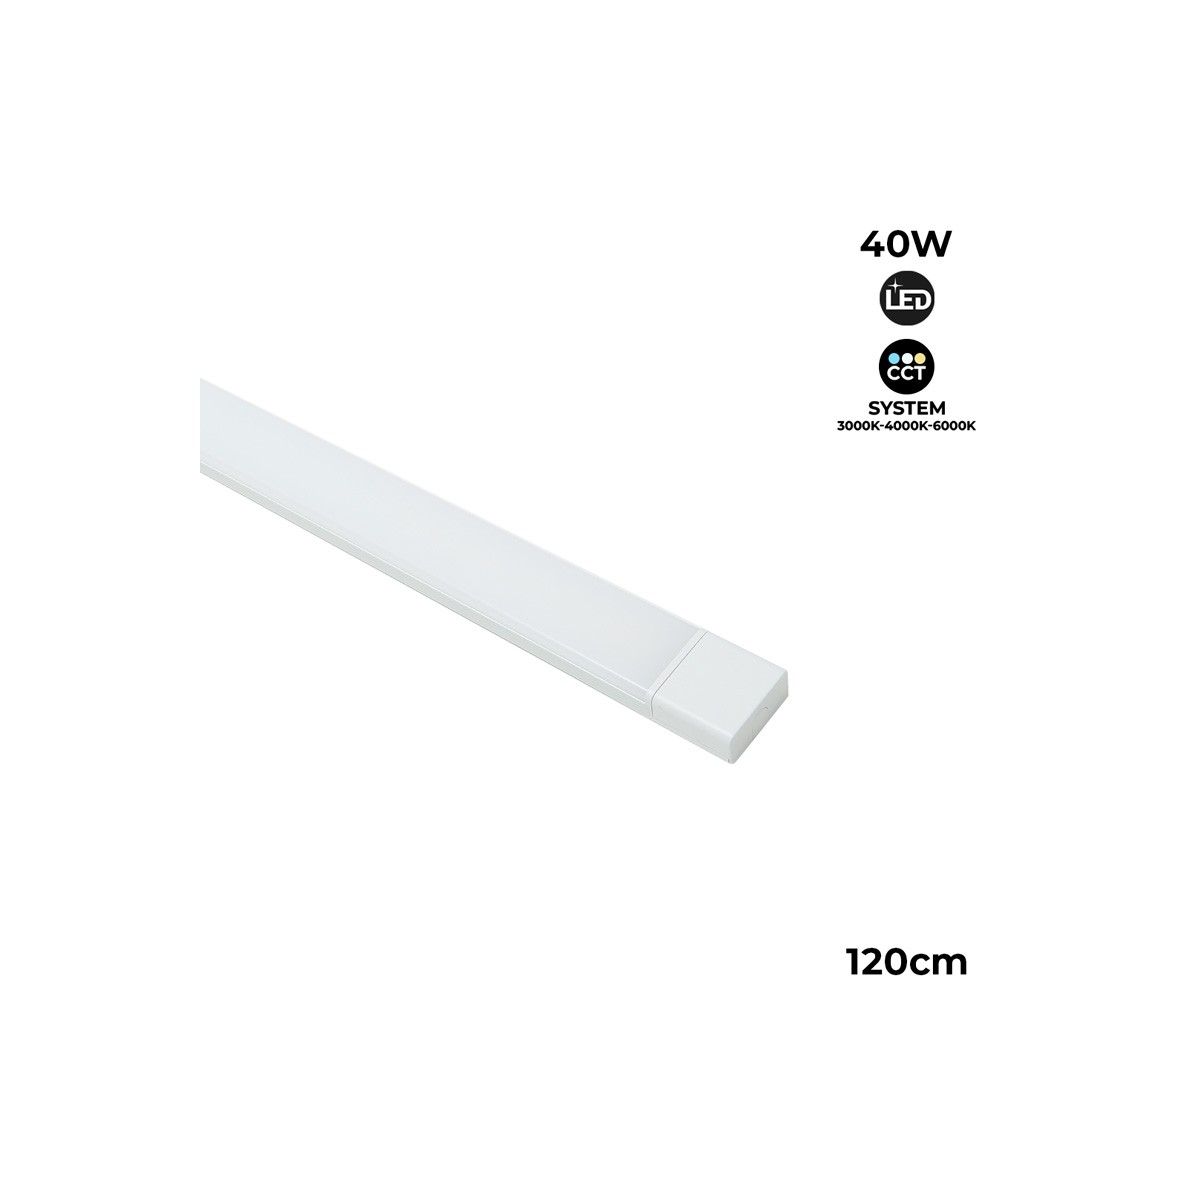 LED Linear Bar CCT 120cm